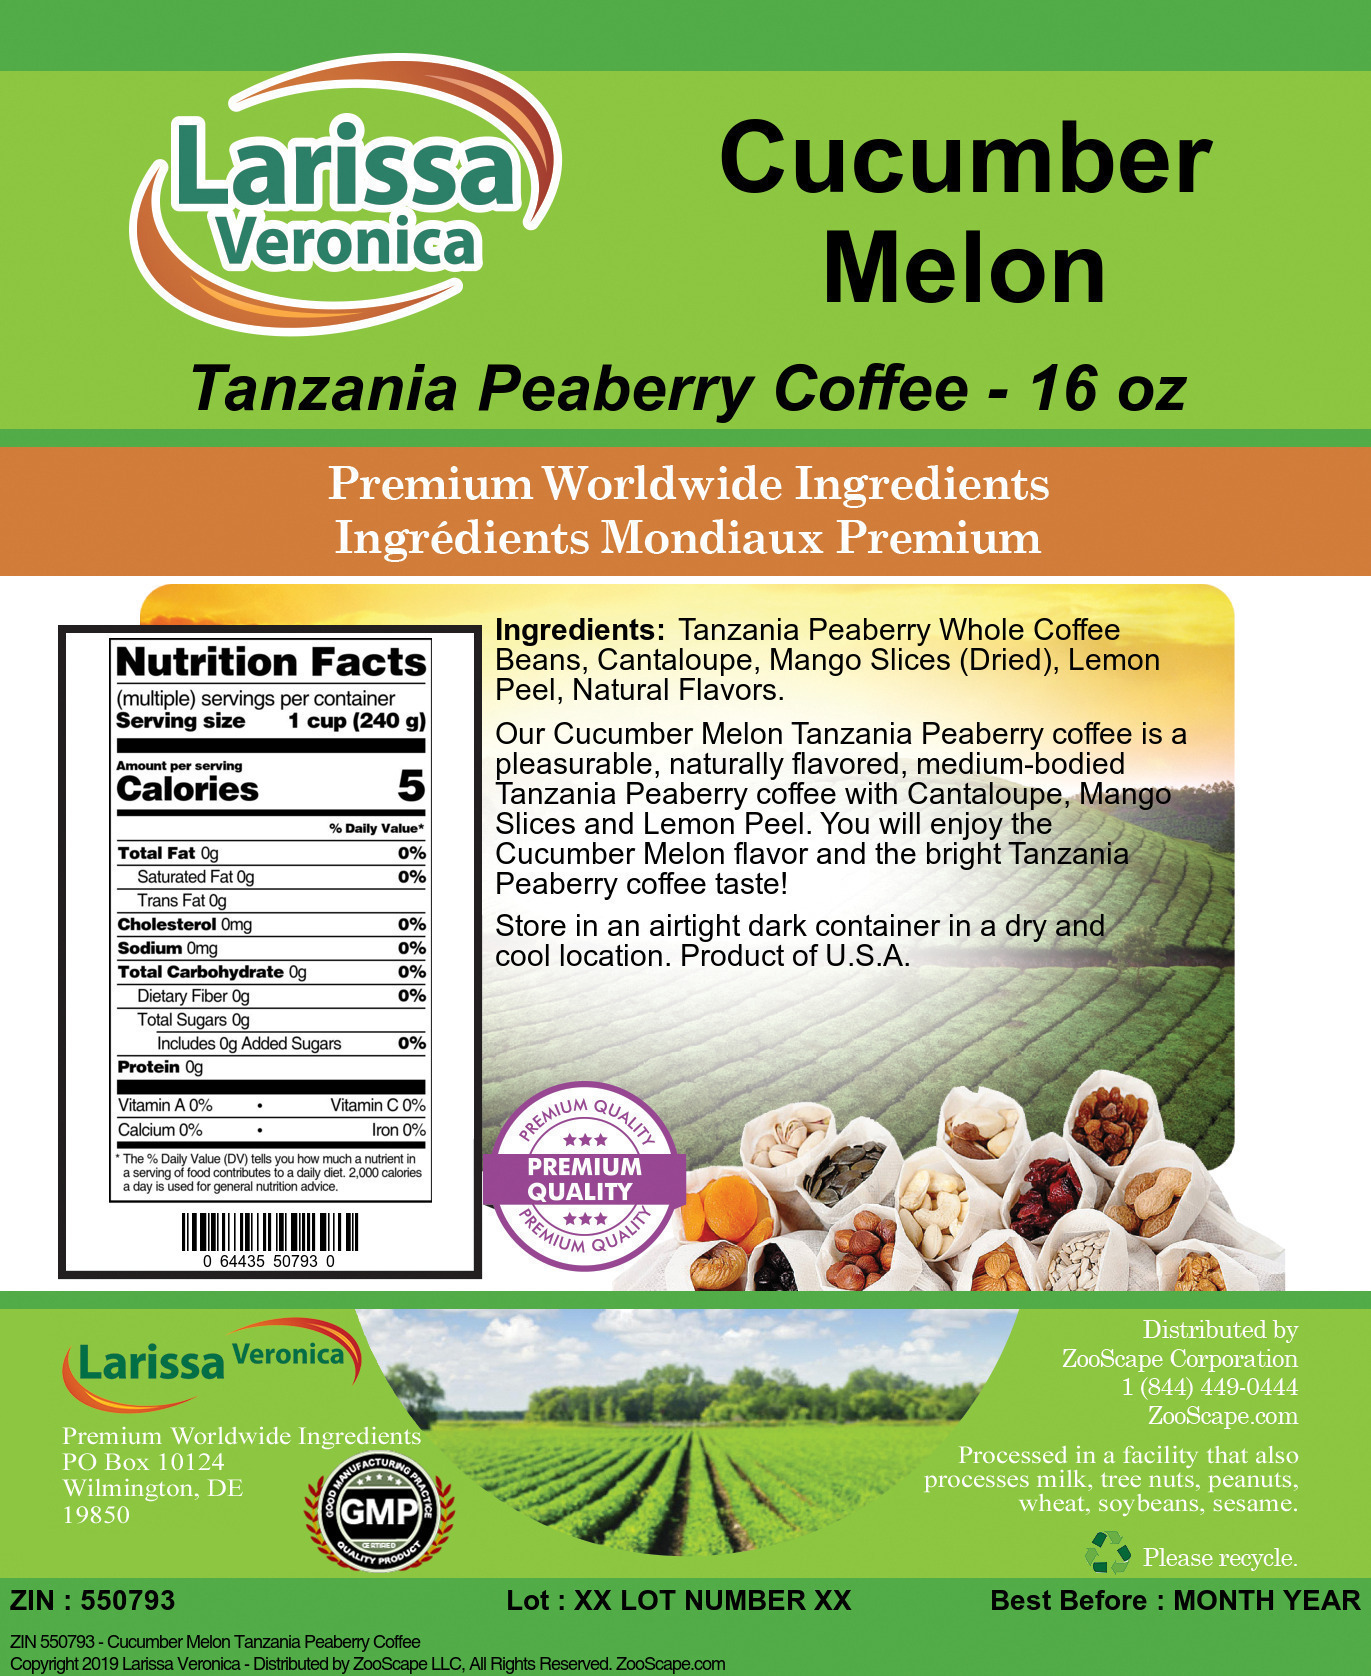 Cucumber Melon Tanzania Peaberry Coffee - Label